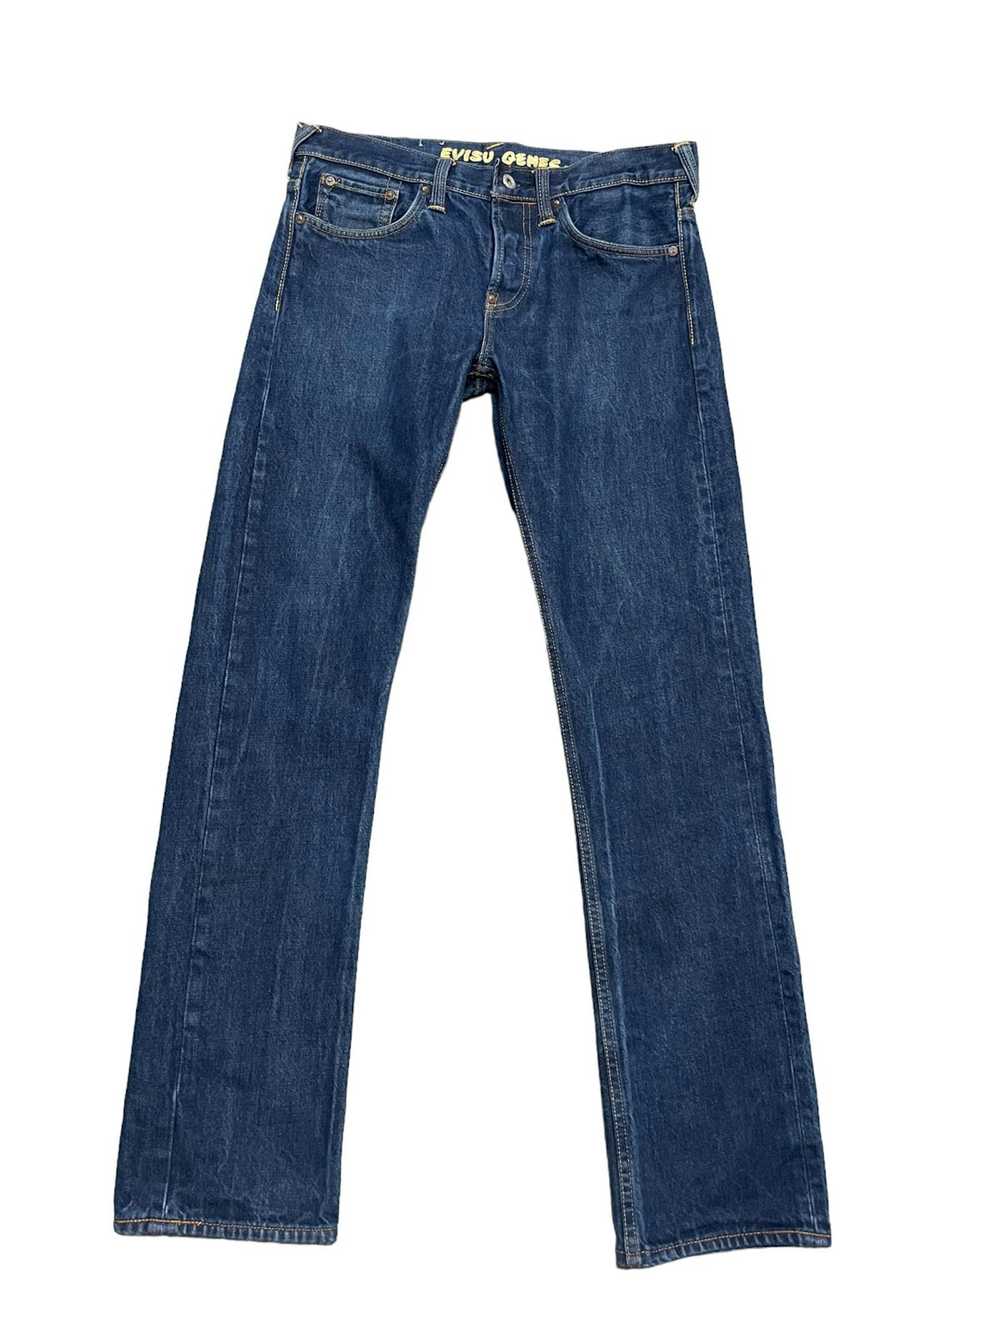 Evisu Vintage Evisu denim jeans - image 1